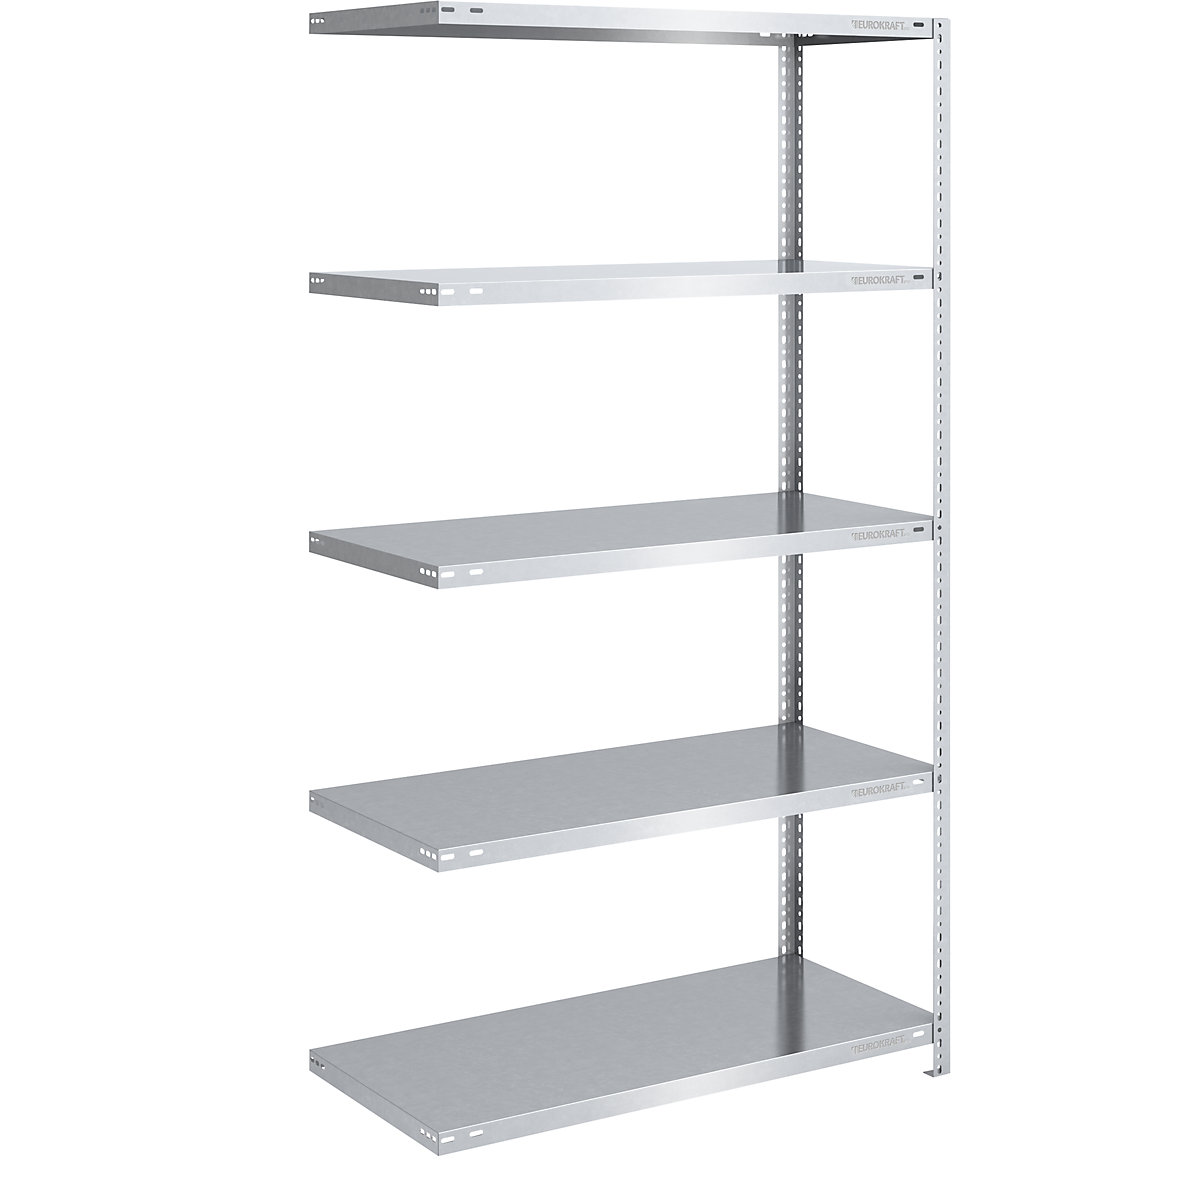 Bolt-together storage shelving, zinc plated, medium duty – eurokraft pro, shelf unit height 2000 mm, shelf width 1000 mm, depth 600 mm, extension shelf unit-10